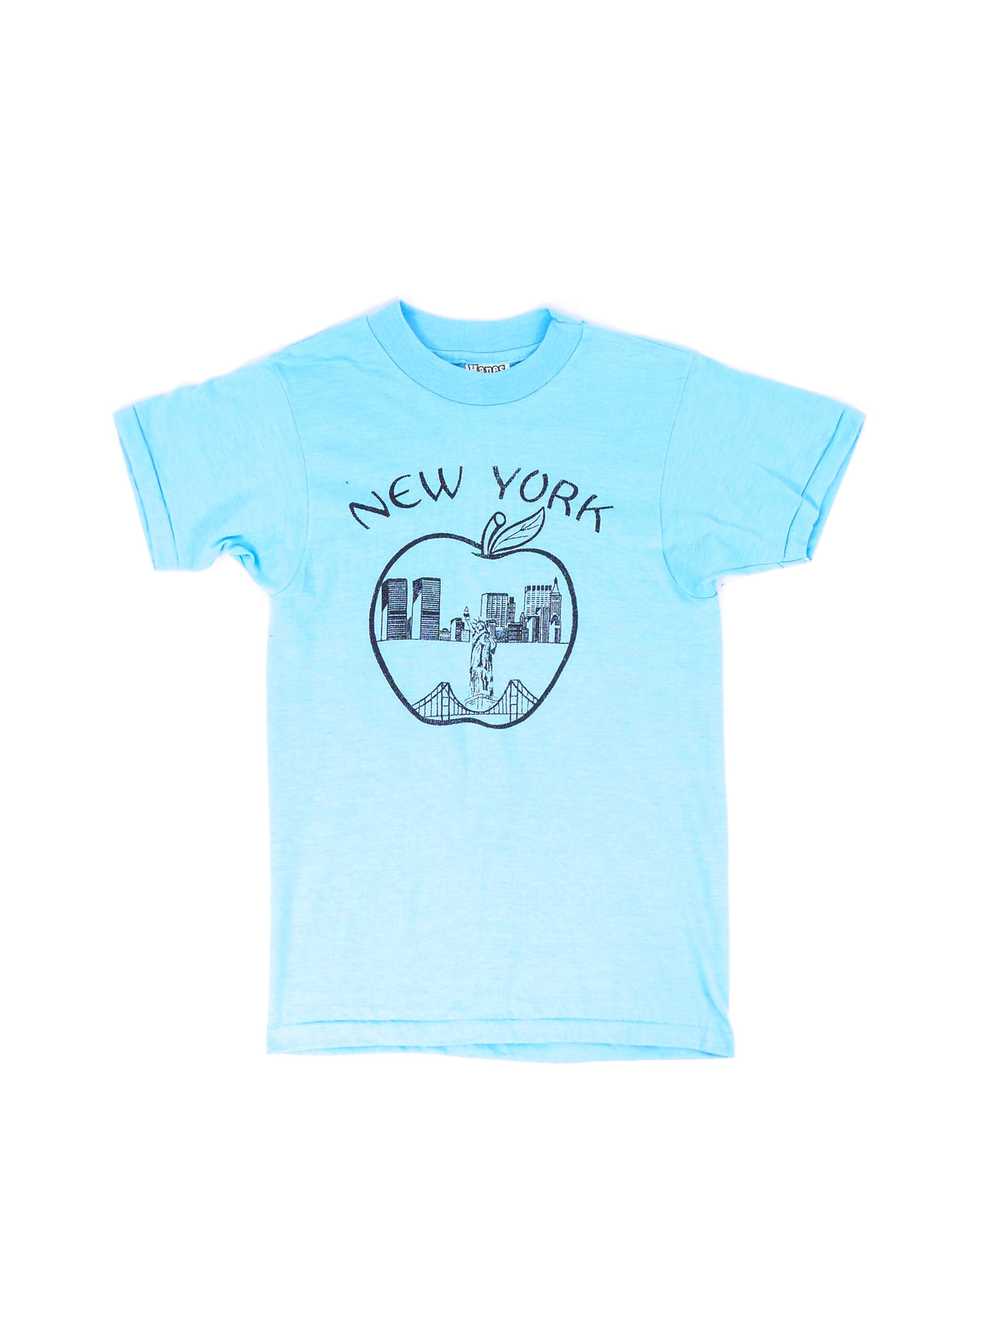 New York "Big Apple" T-Shirt - image 4